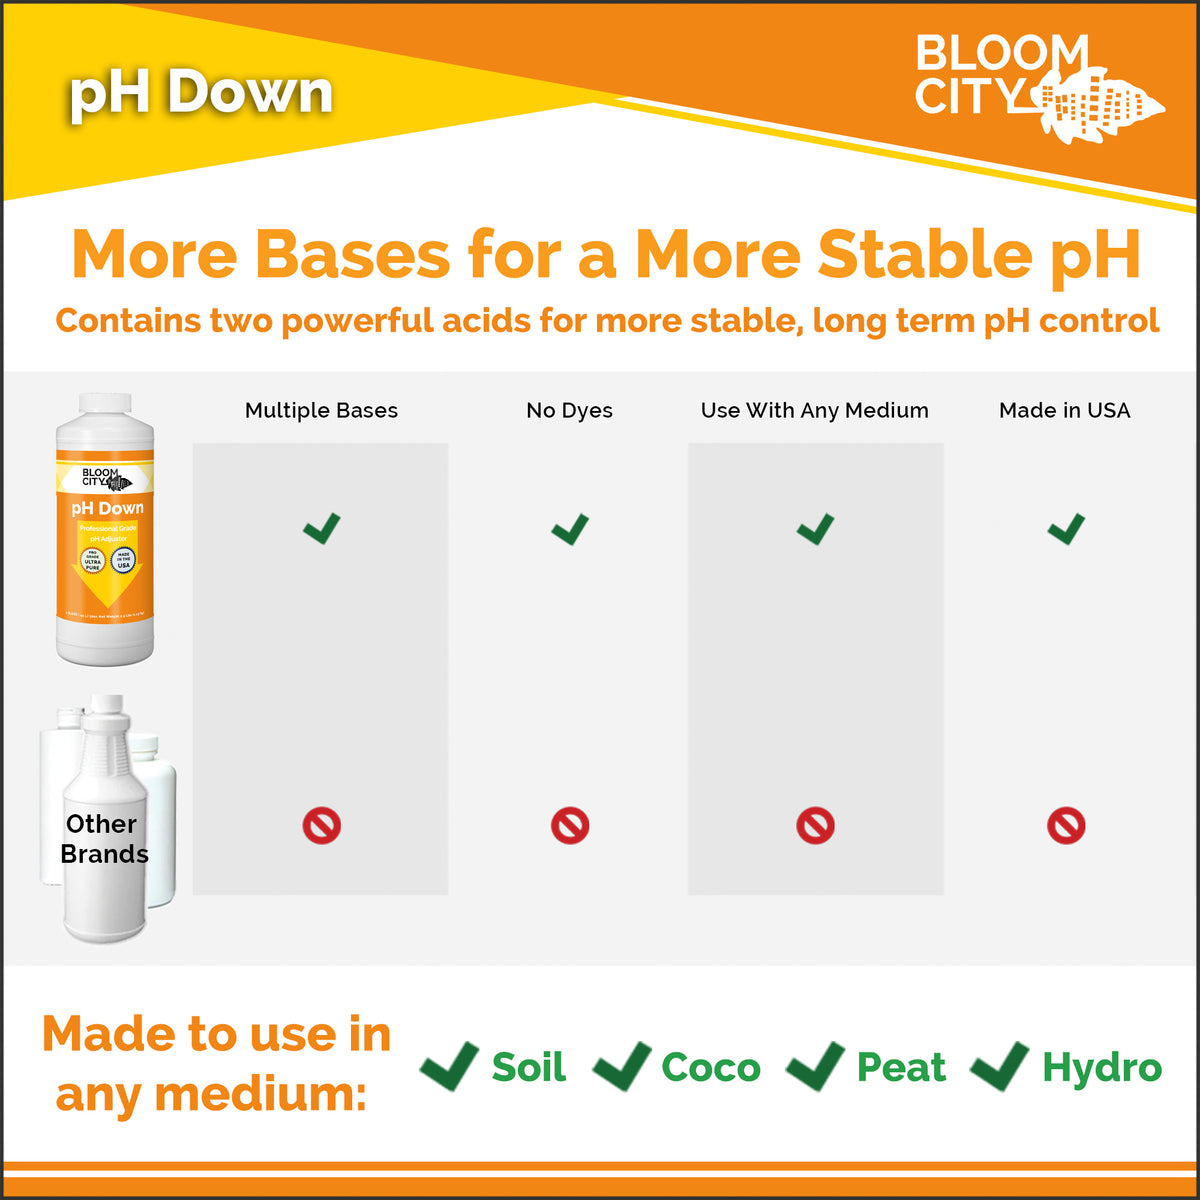 pH Up + pH Down Kit | Professional Grade